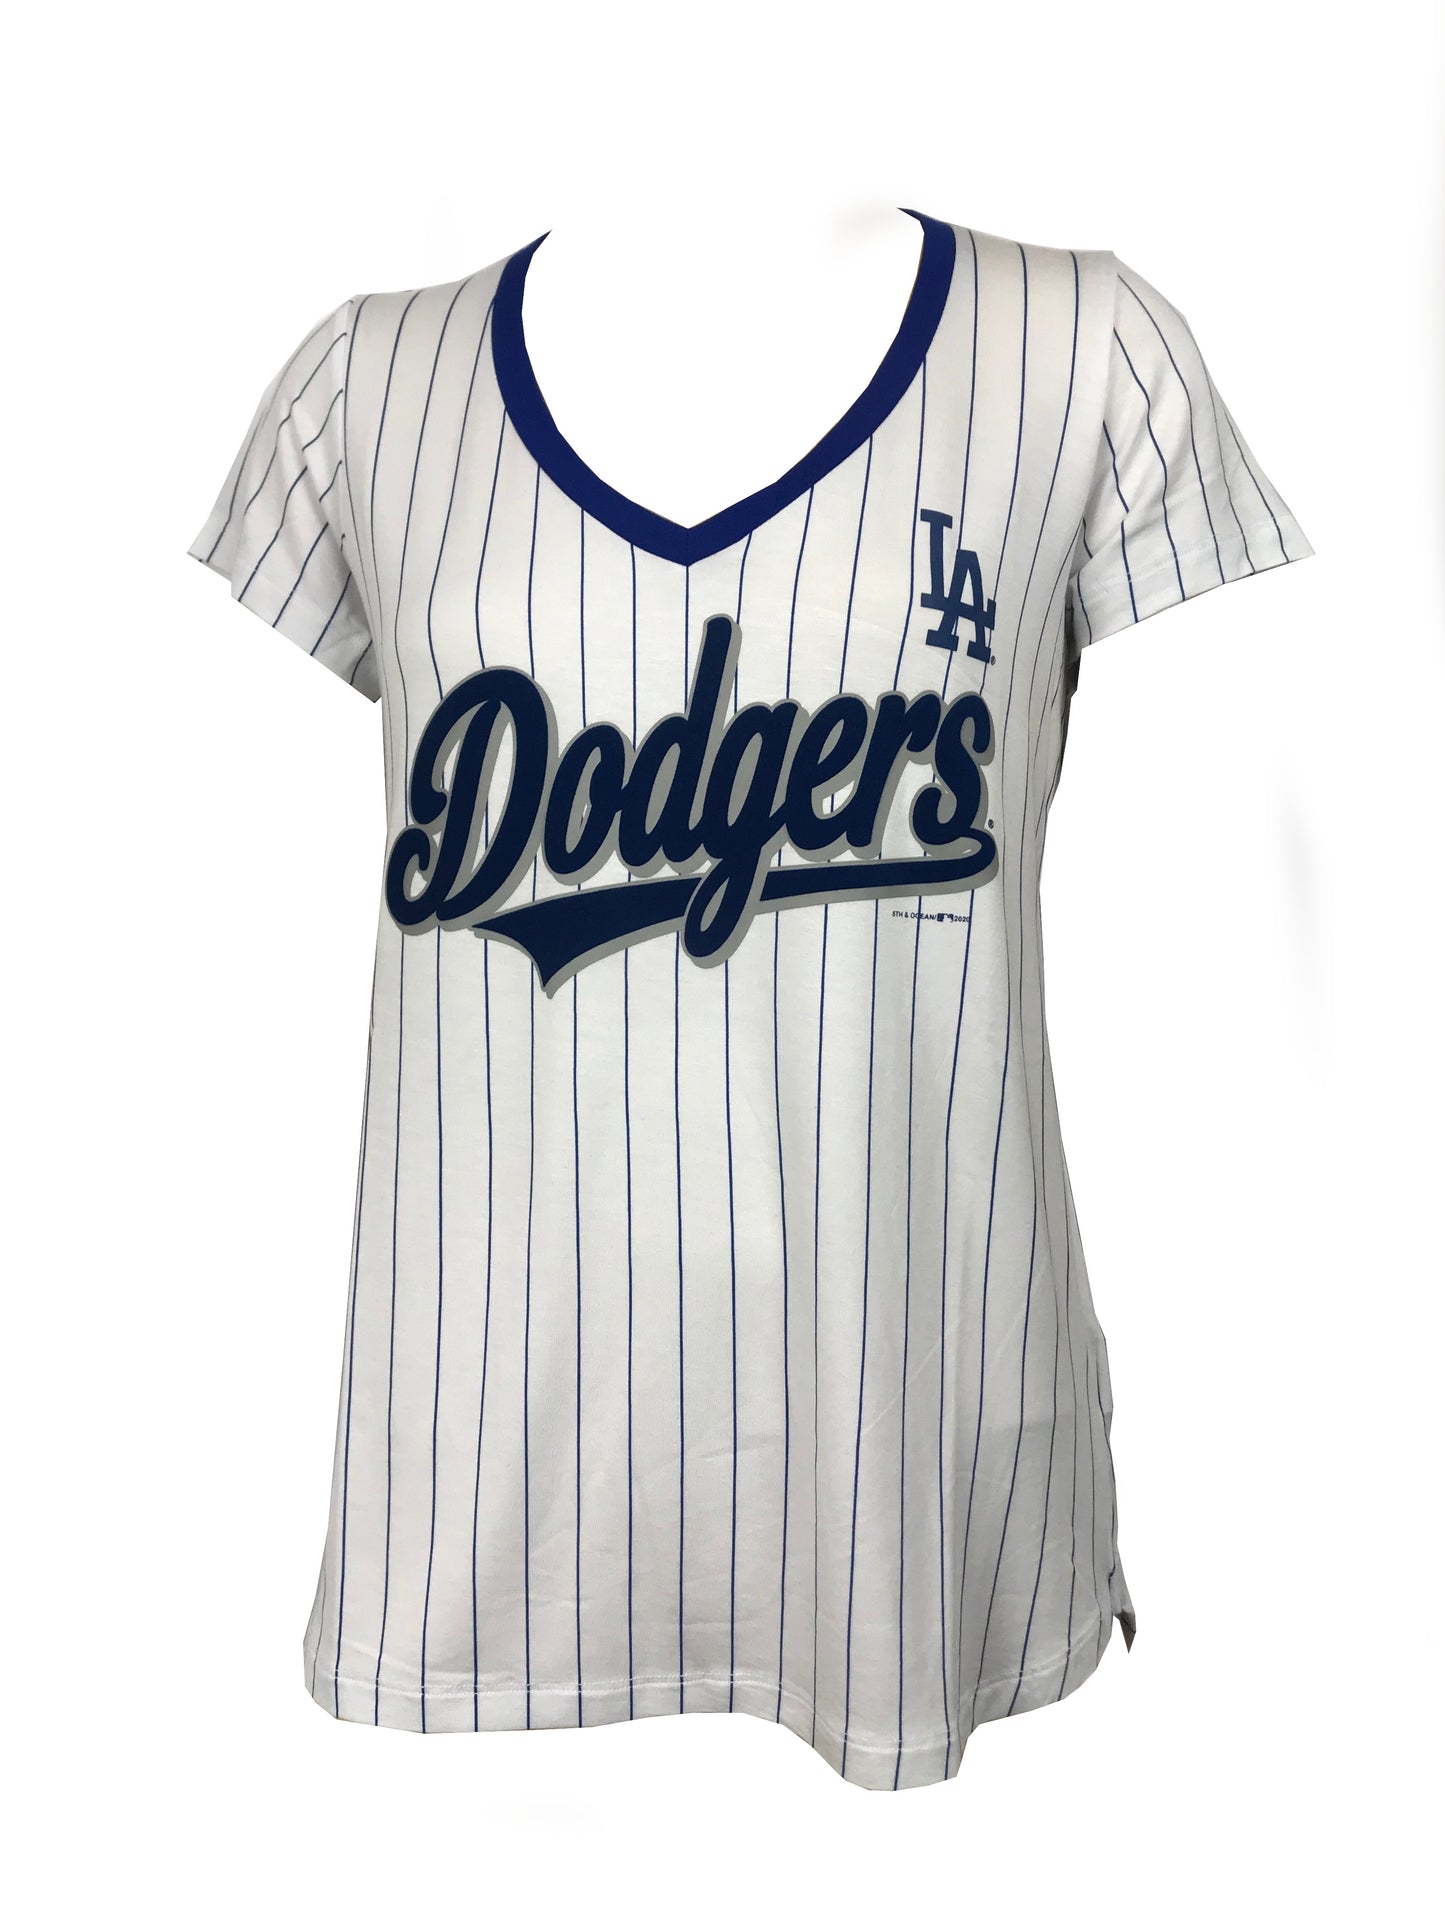 FIFTH&OCEAN Los Angeles Dodgers Women's Stripe Neck T-Shirt 20 / M